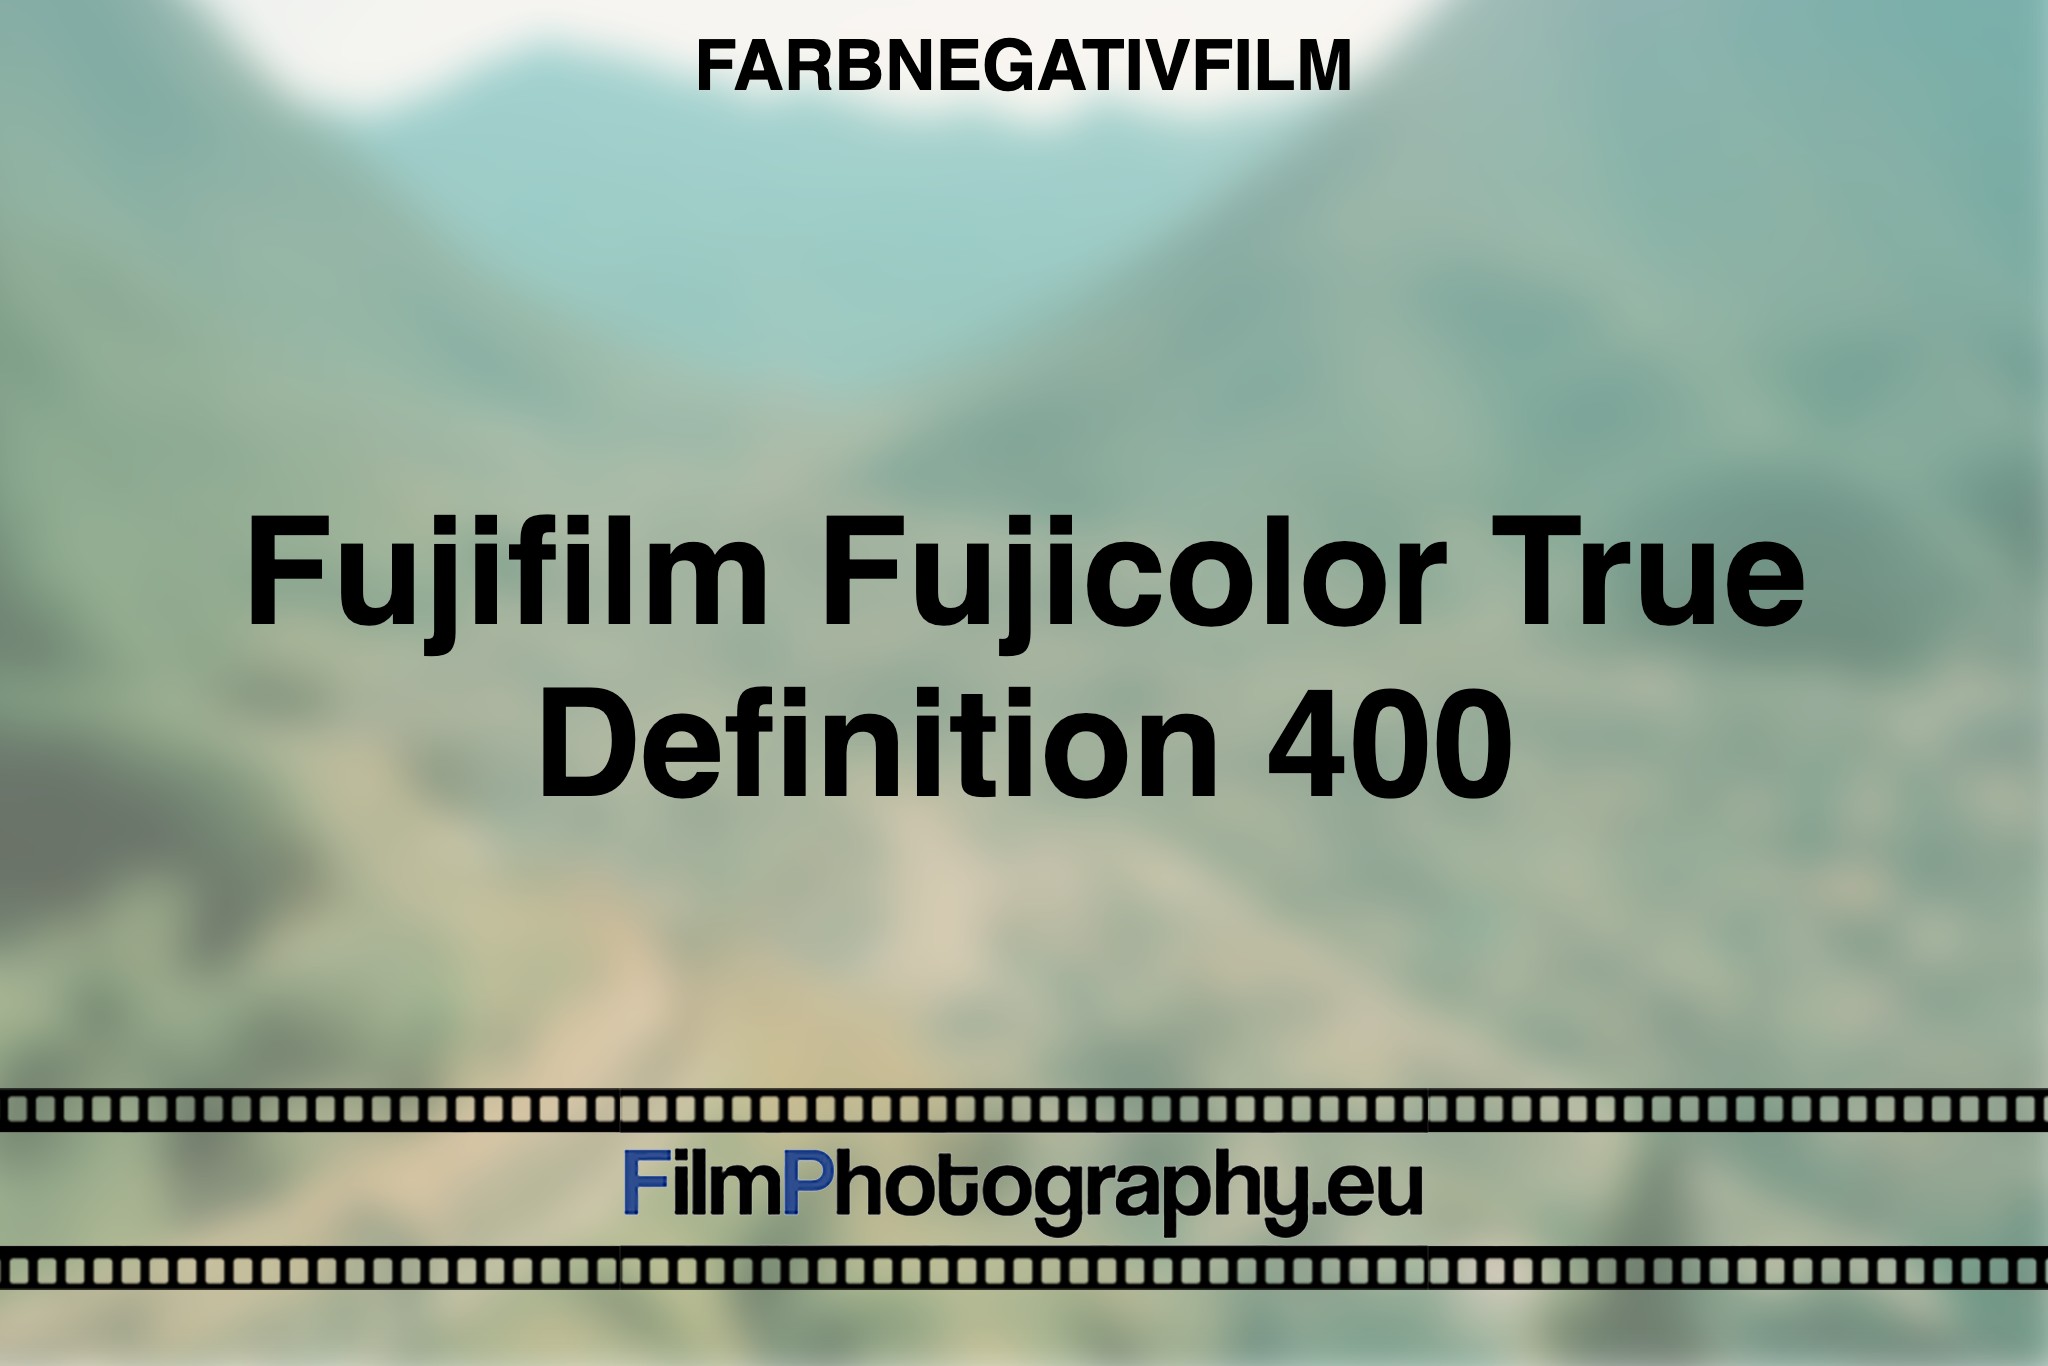 fujifilm-fujicolor-true-definition-400-farbnegativfilm-bnv